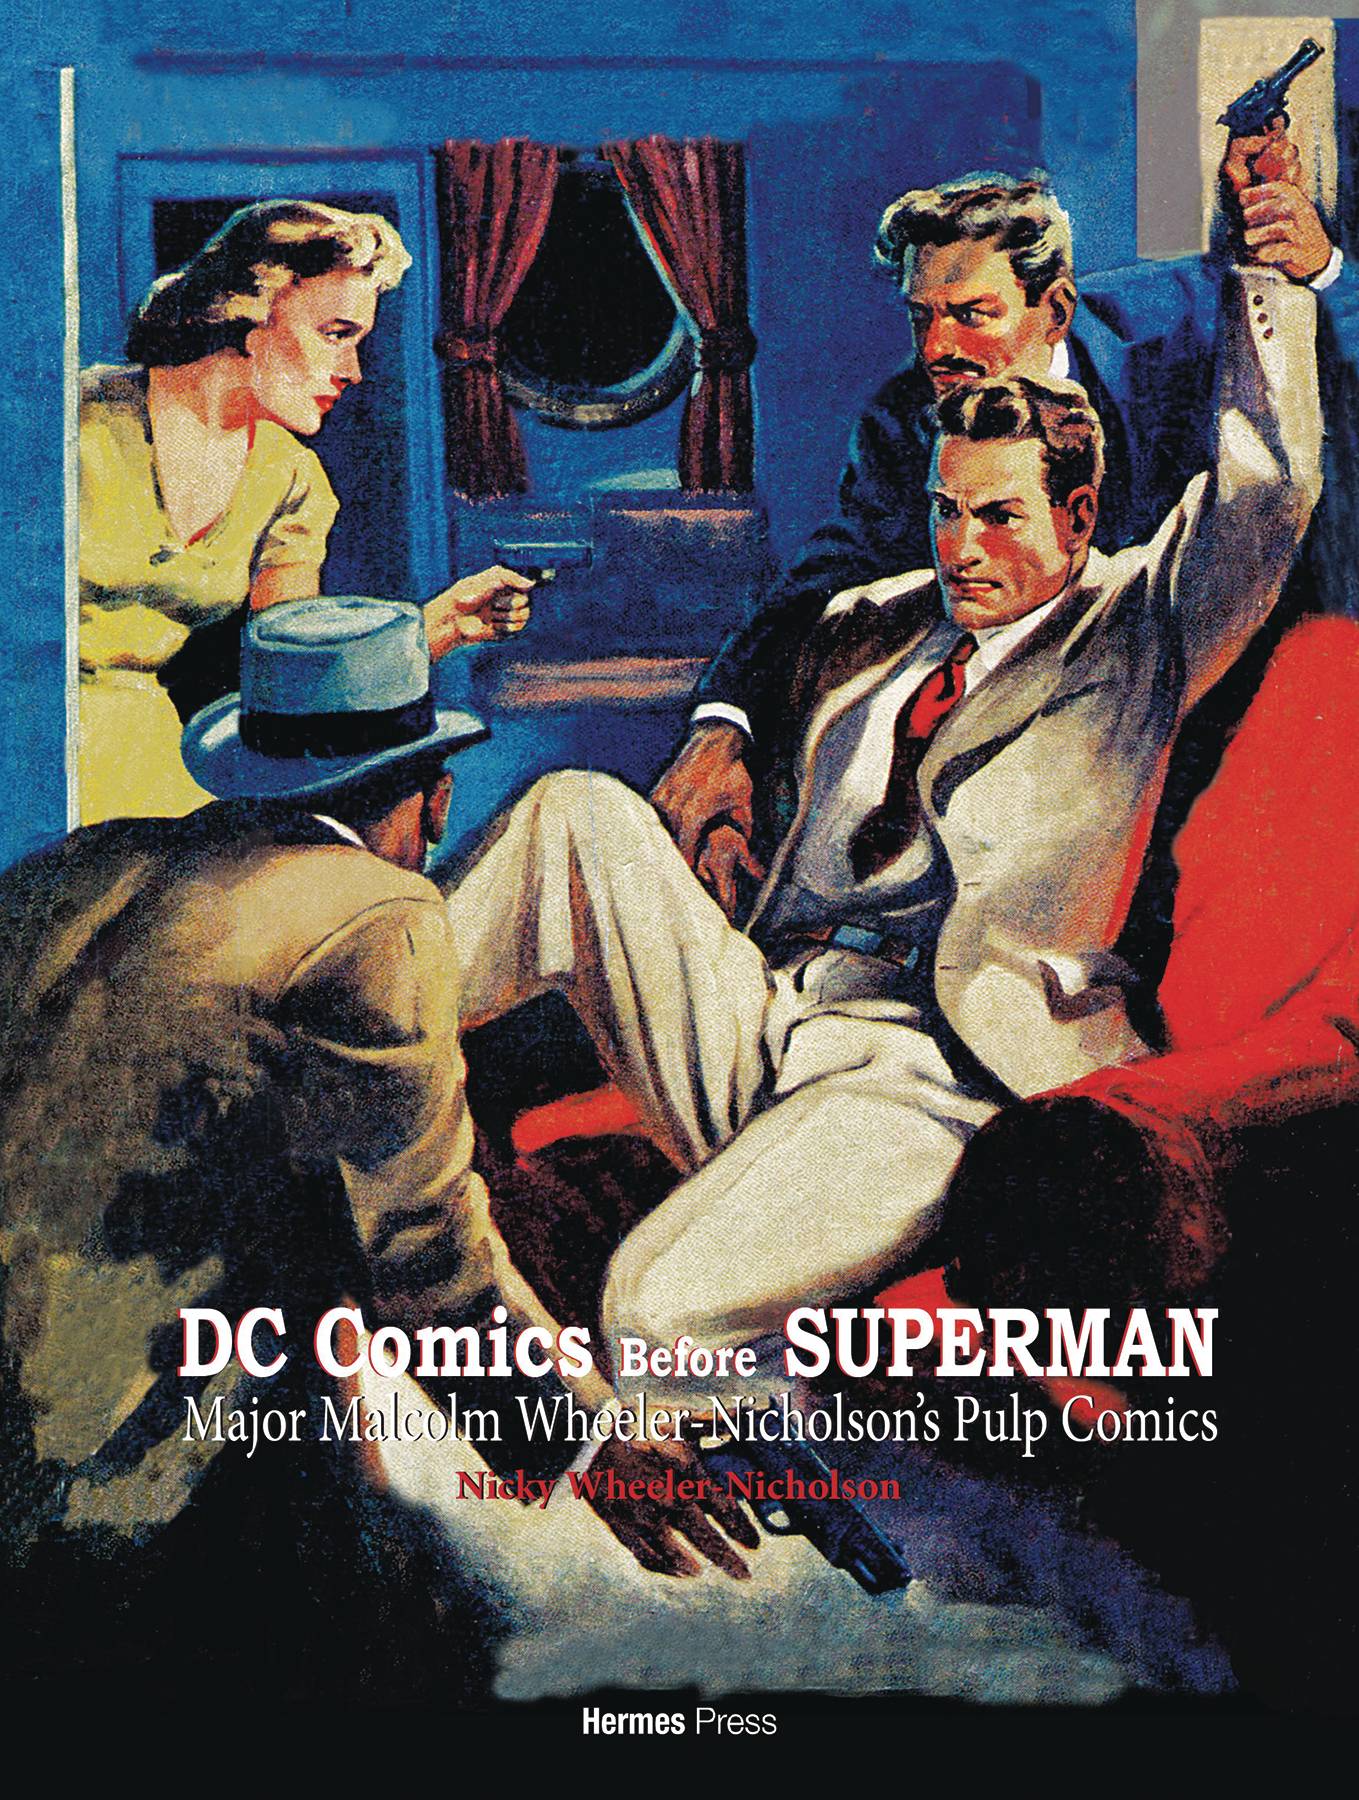 DC COMICS BEFORE SUPERMAN MAJ WHEELER NICHOLSON PULP COMICS - Third Eye